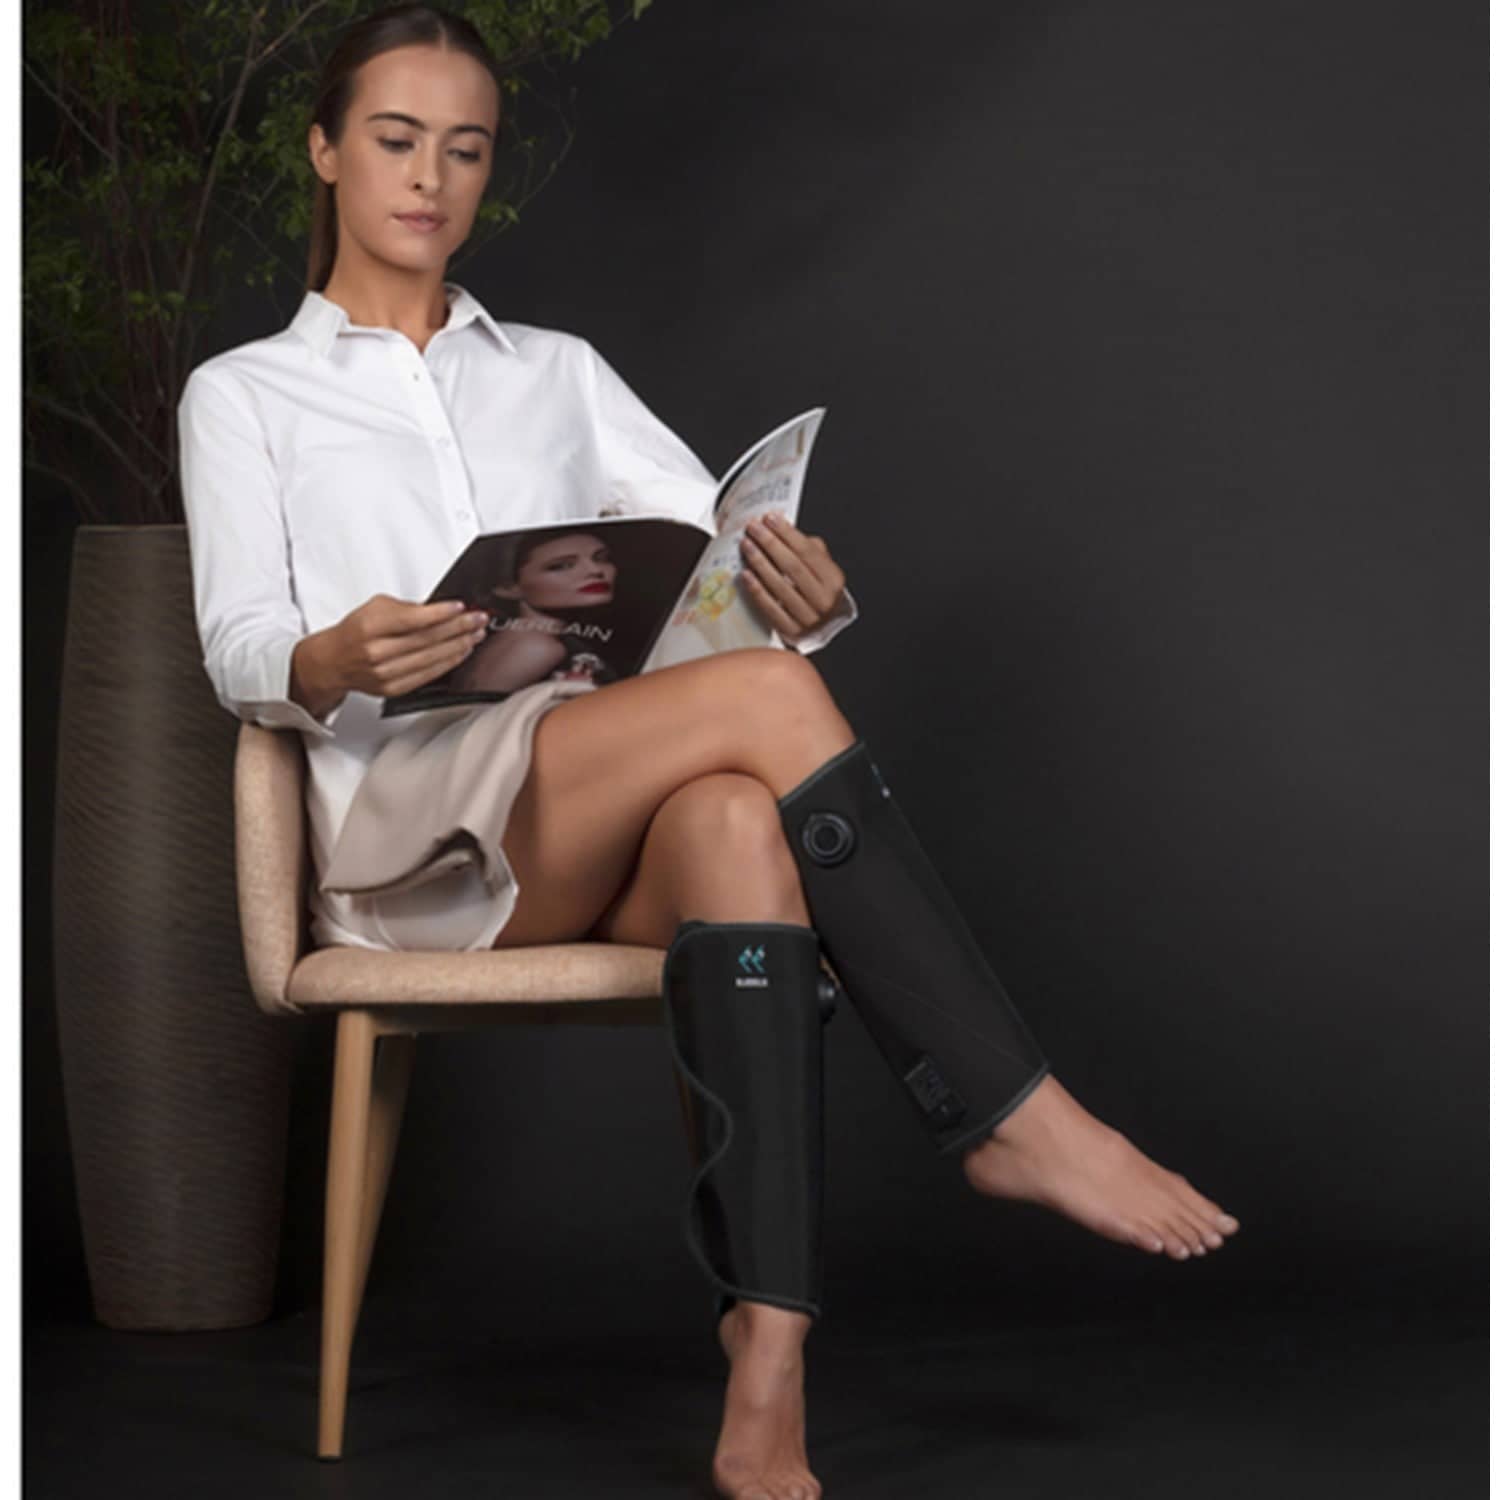 ELEEELS A1 Cordless Air Compression Leg Massage Device